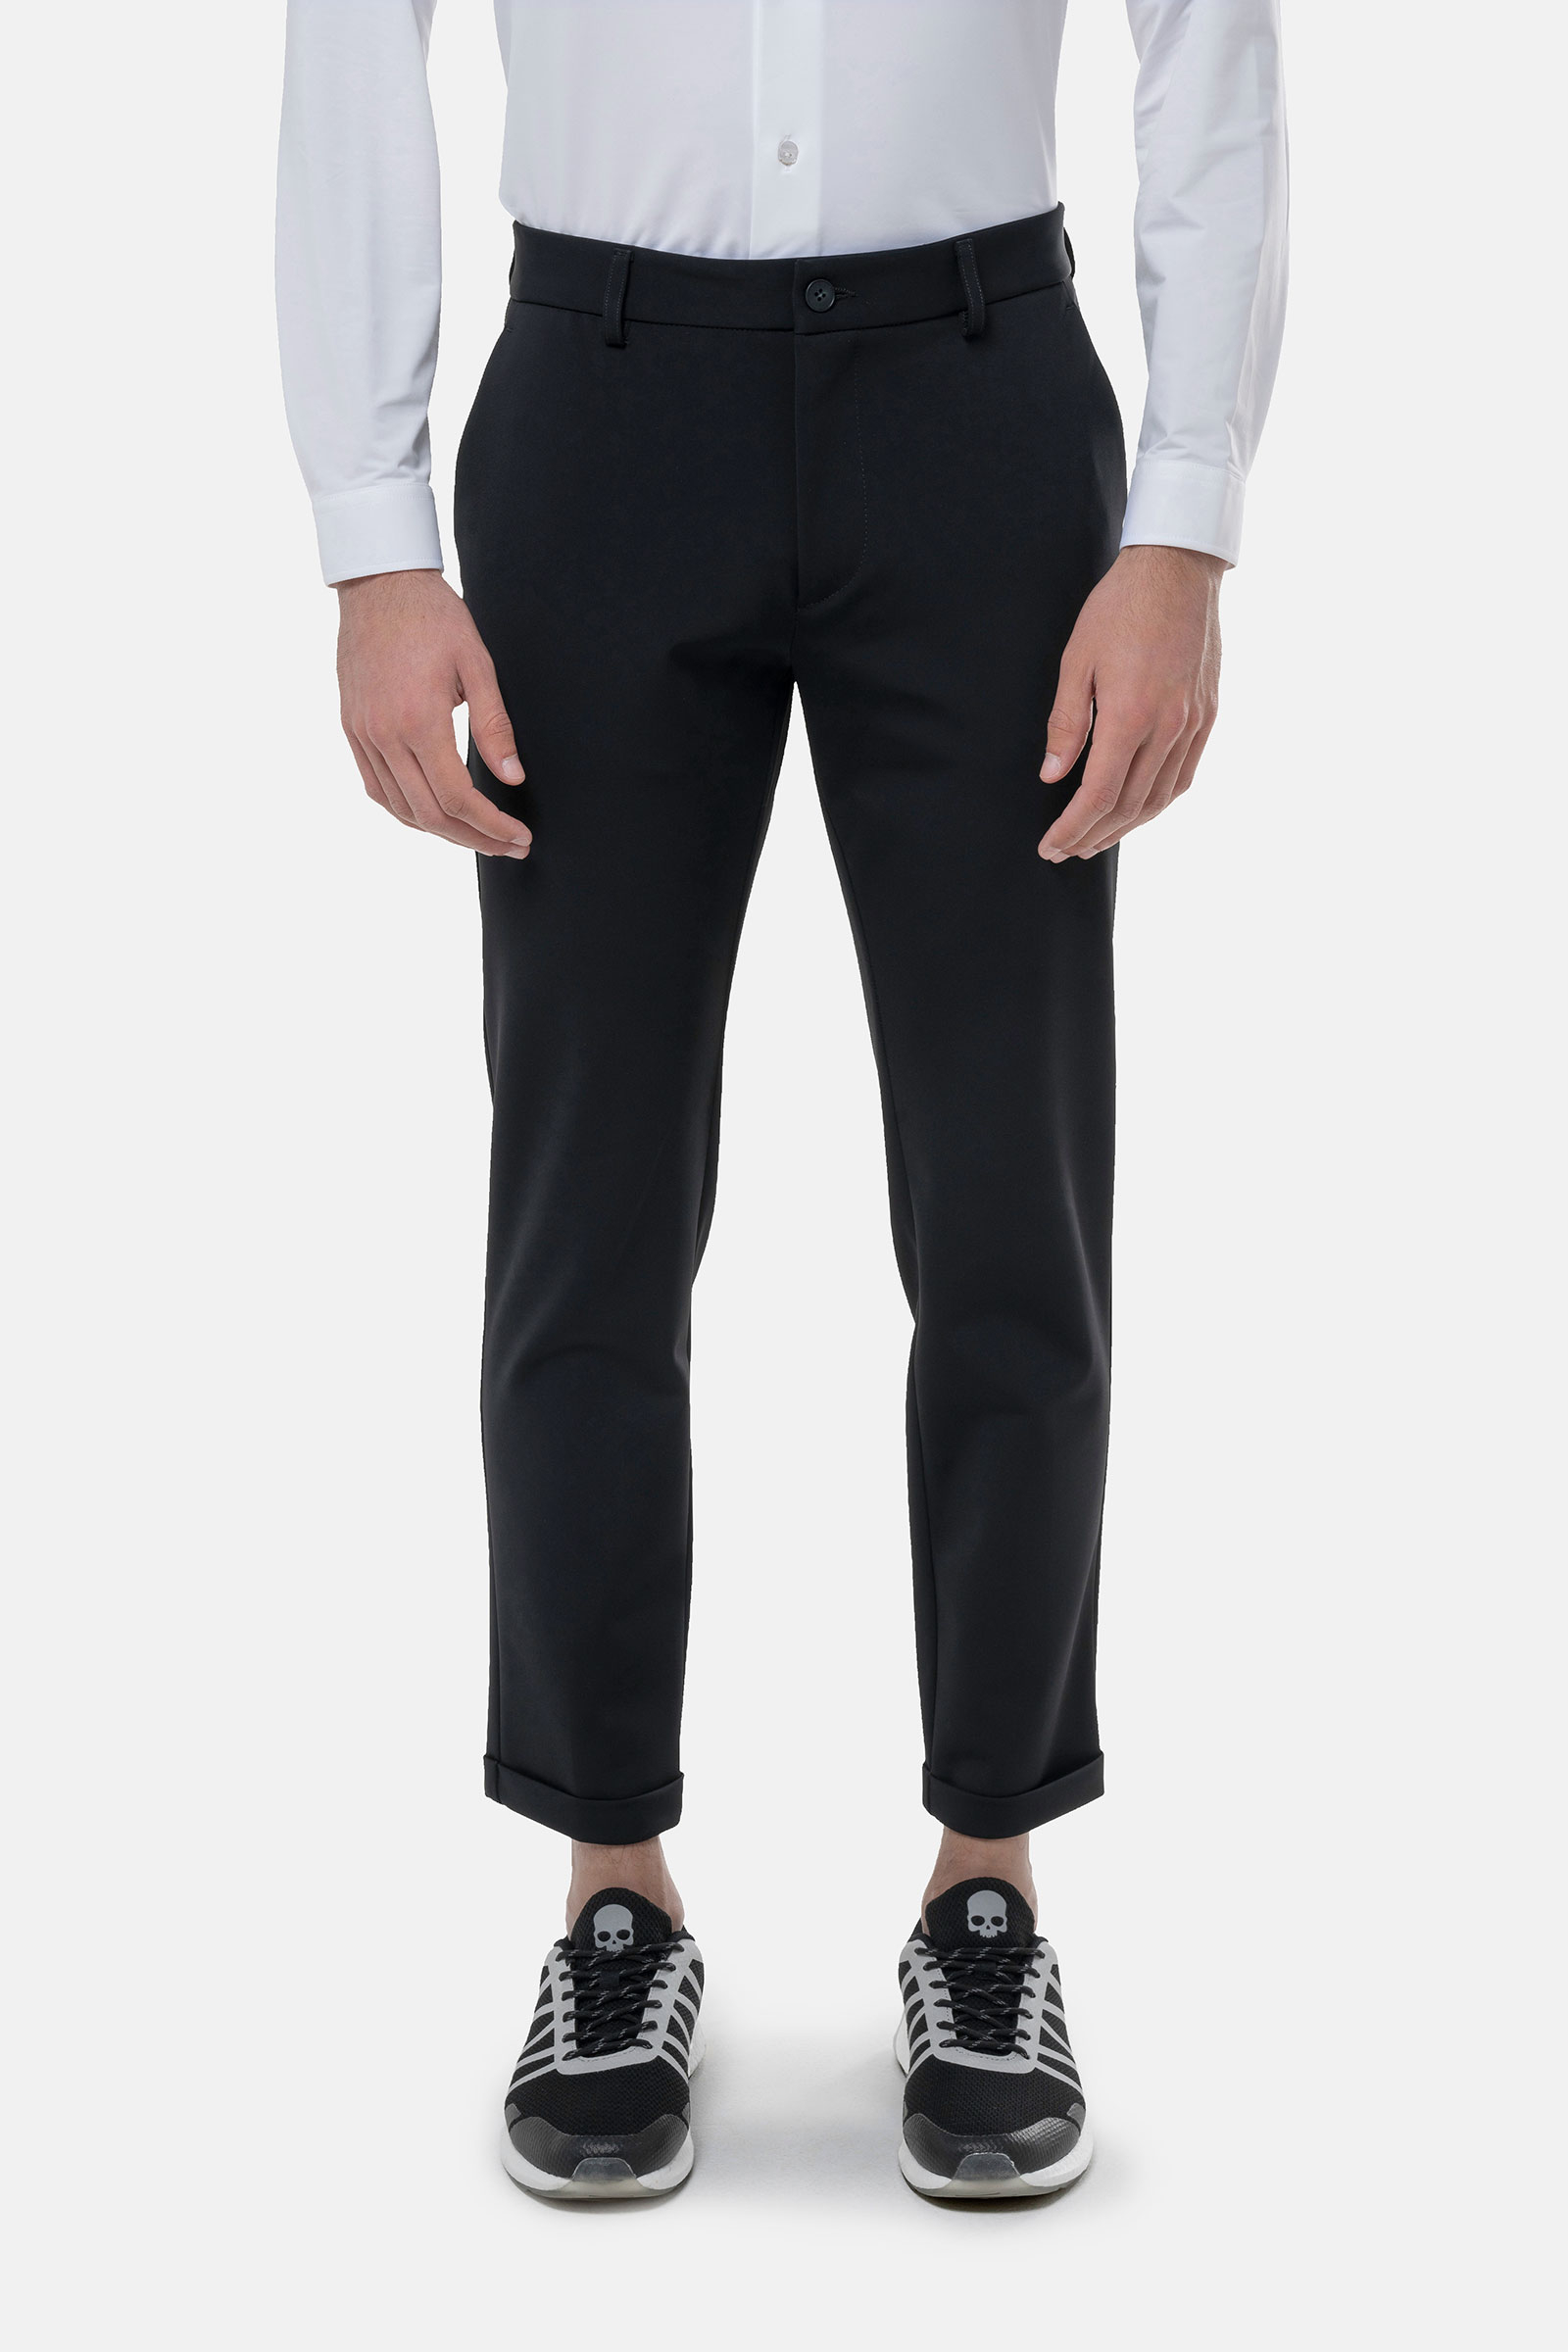 CLASSIC PANTS - BLACK,ANTHRACITE - Hydrogen - Luxury Sportwear